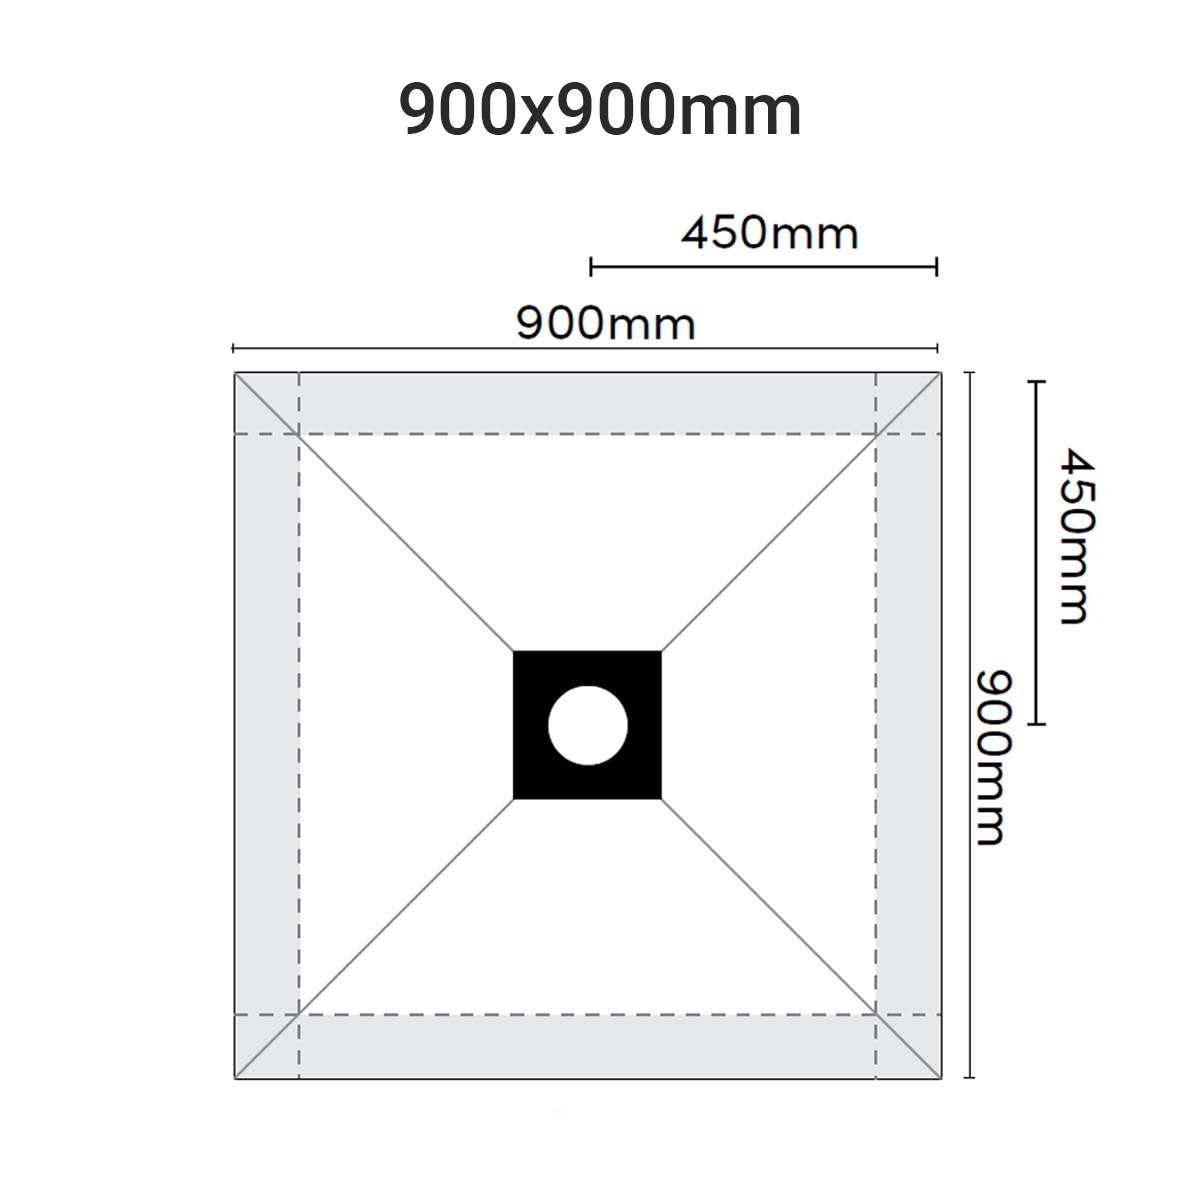 sharpslope square drain 900x900mm dimensions